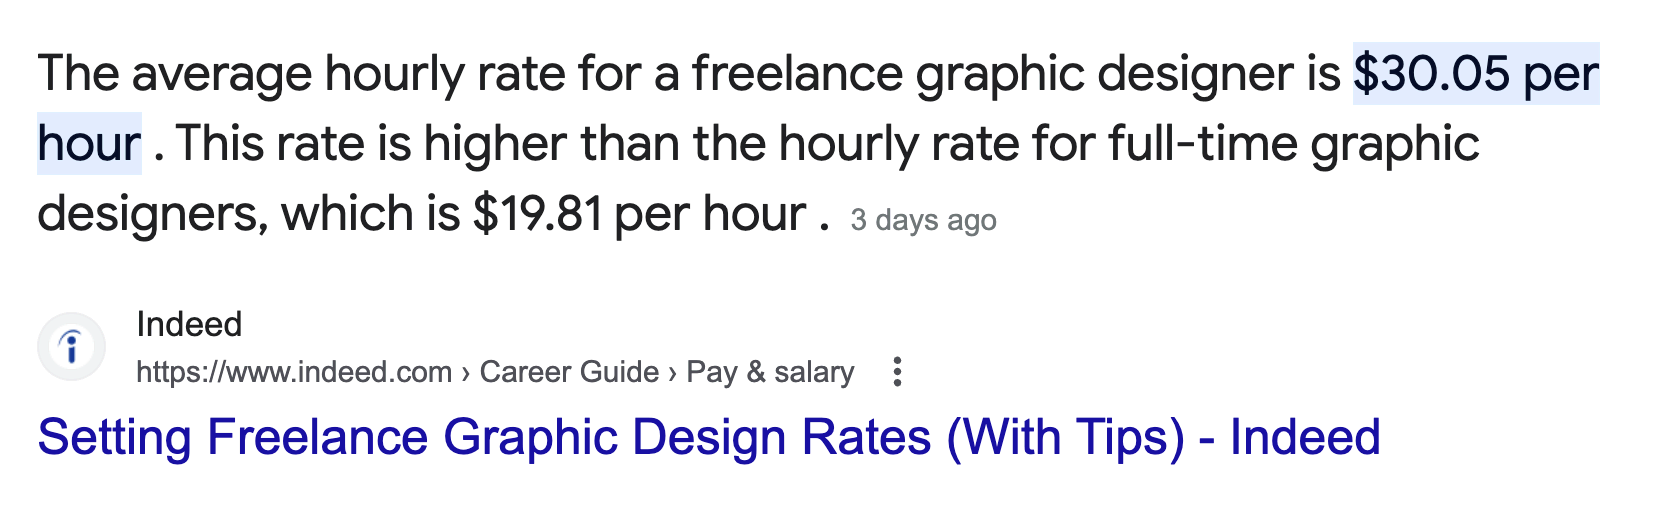 average freelance rate graphic designer